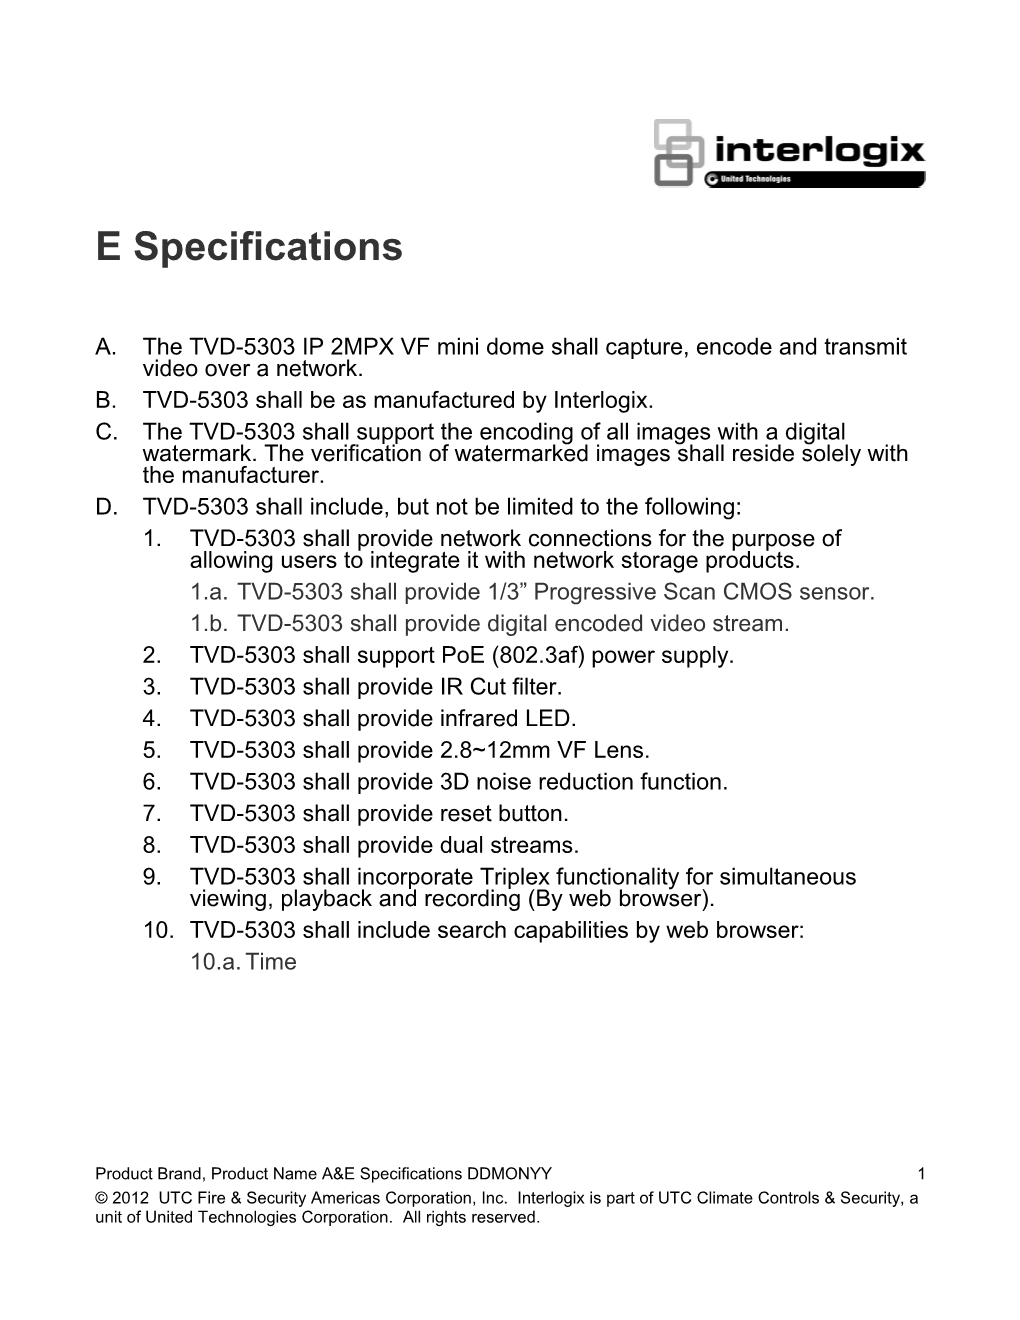 TVD-5303 H.264 IP 2MPX VF Mini Dome A&E Specifications